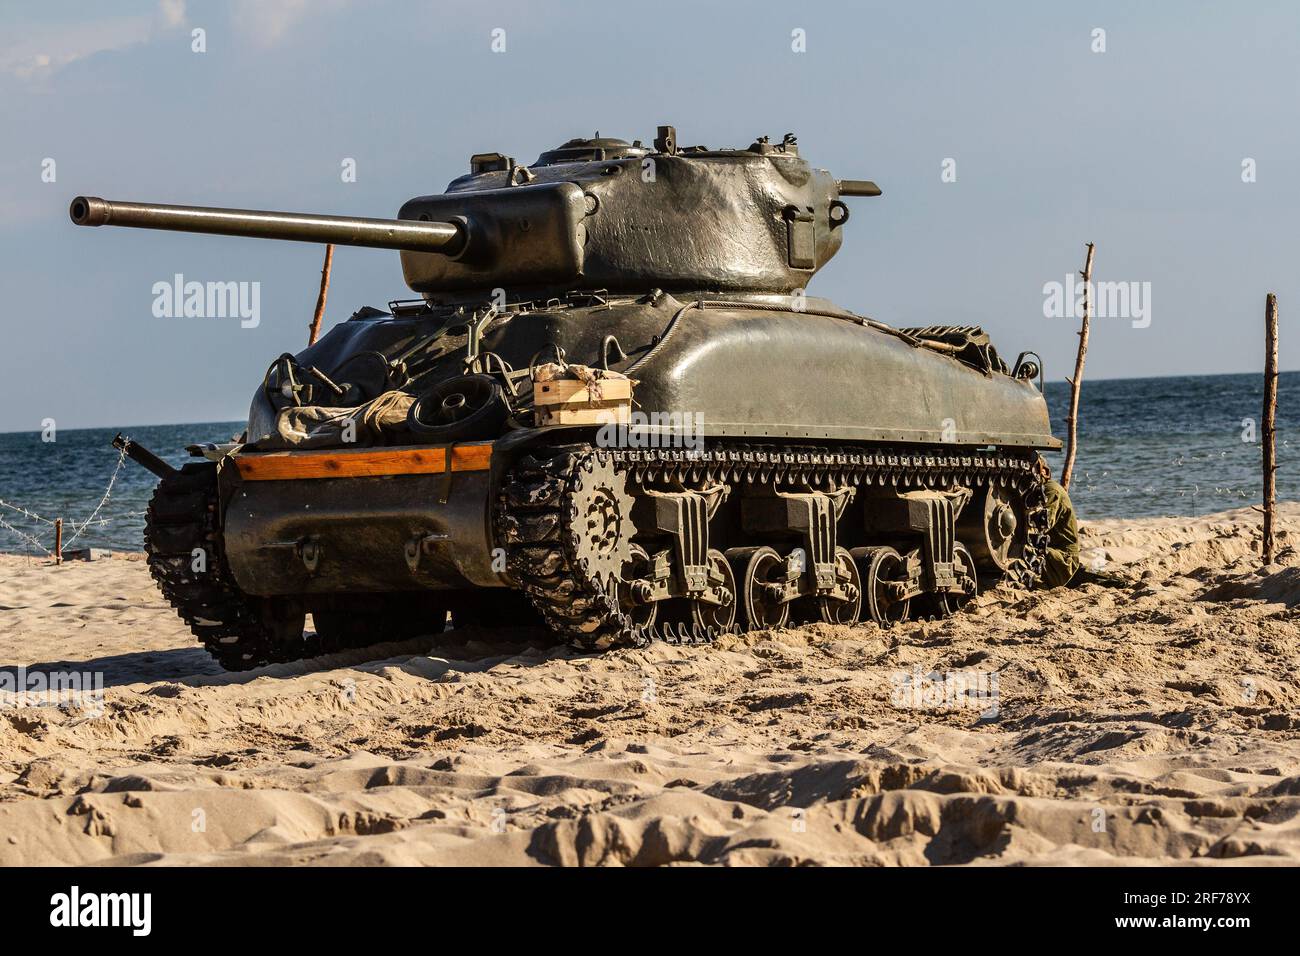 An American World War II Sherman tank on the beach. Stock Photo